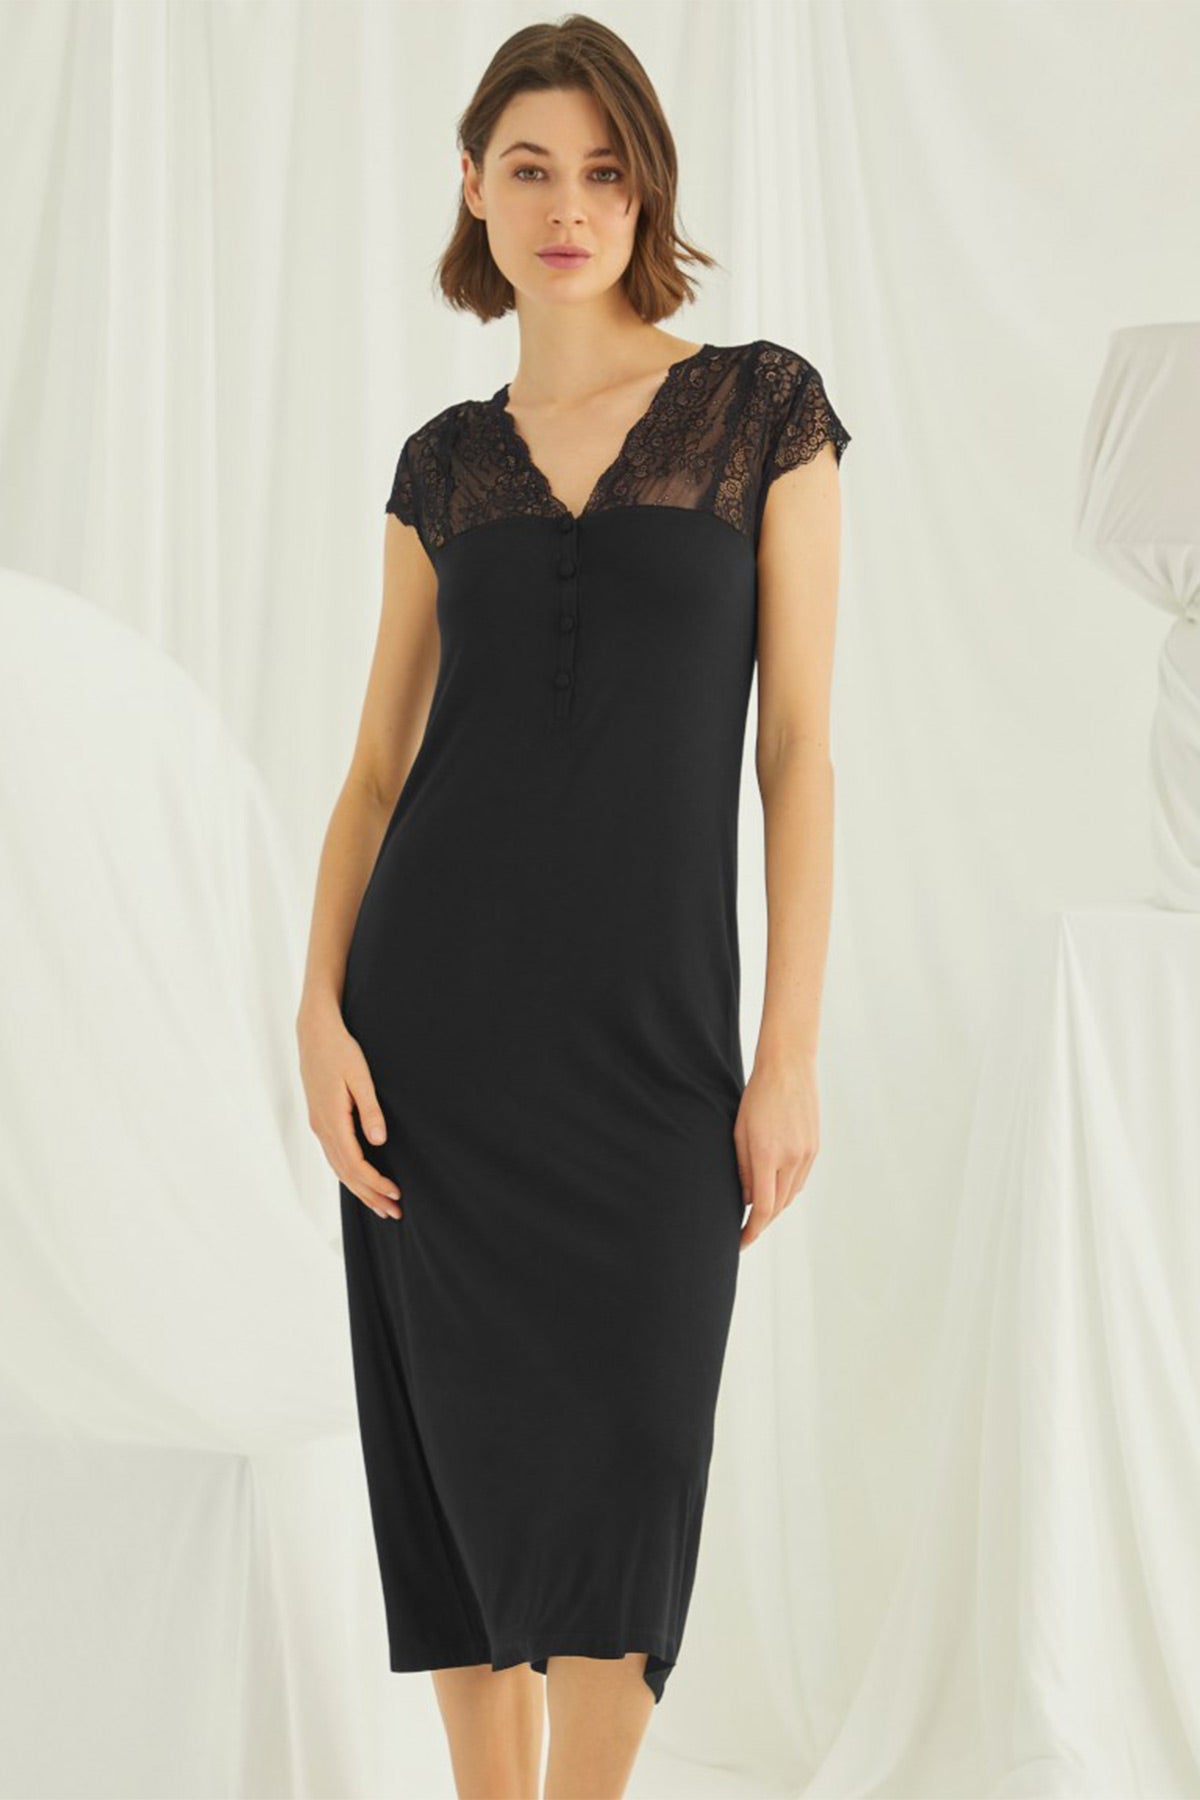 Shopymommy 18457 Lace V-Neck Plus Size Maternity & Nursing Nightgown Black